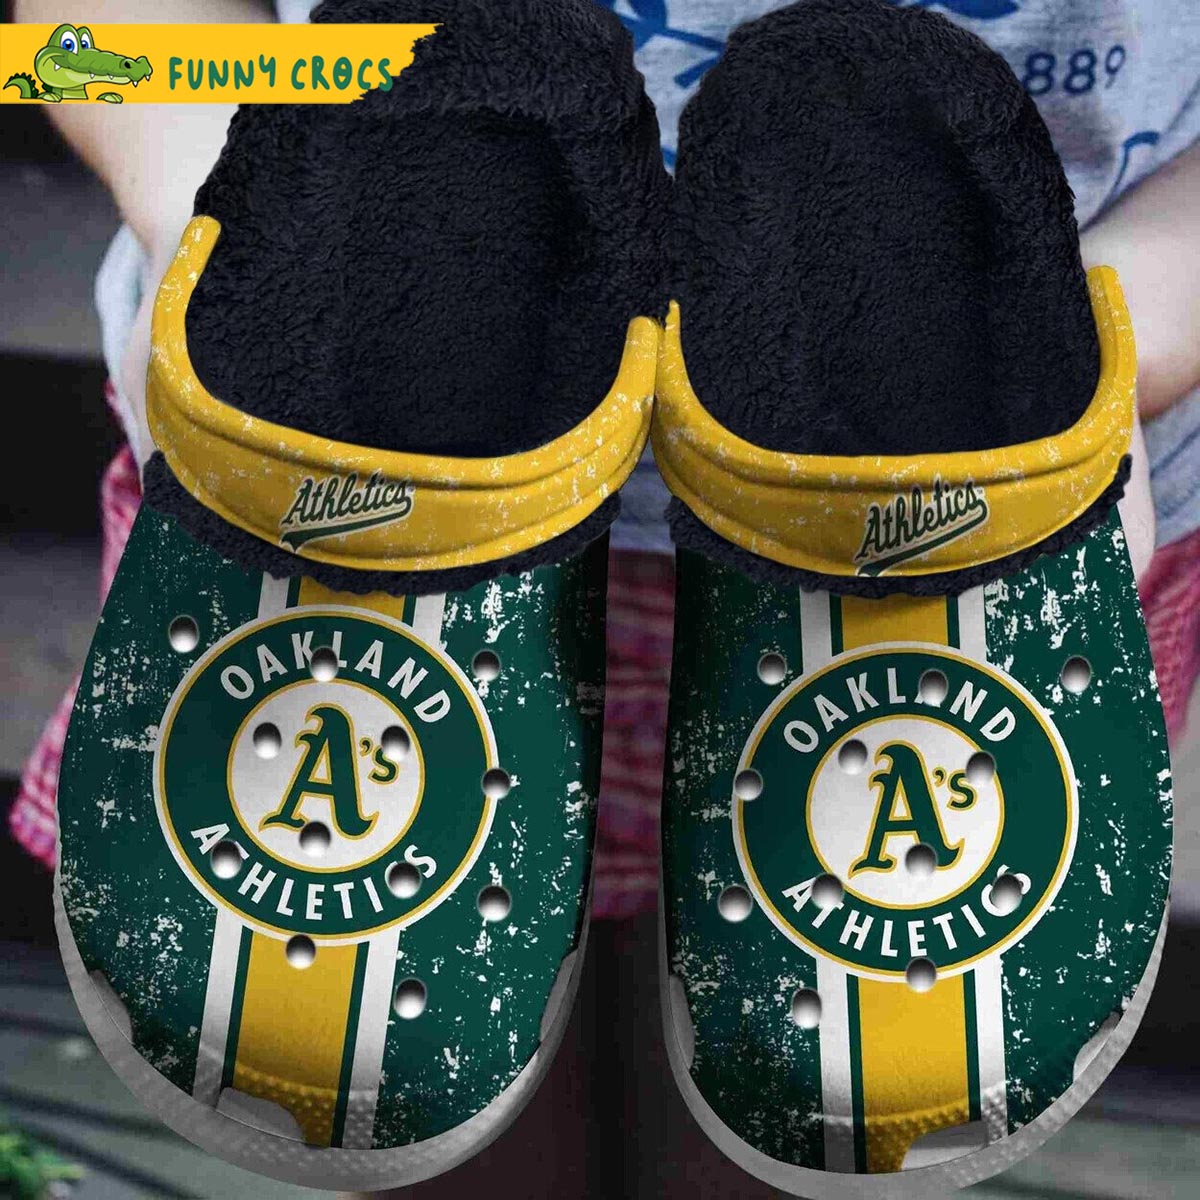 Oakland Athletics Comfortable Fur Lined Crocs Shoes - Discover Comfort ...